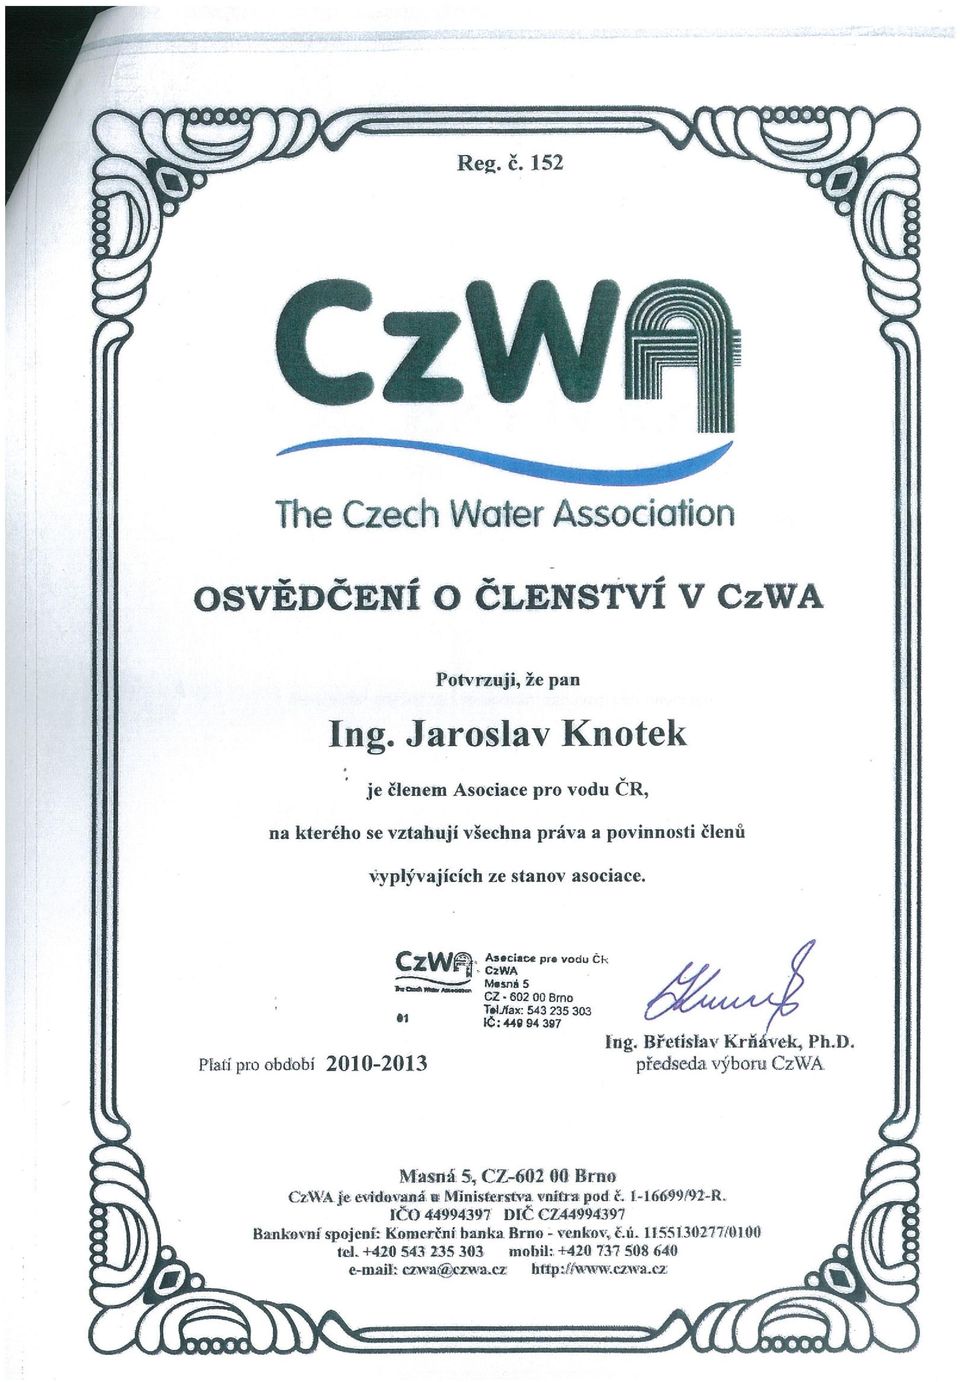 Plstí pro obdébí 2010-2013 1 Anci.c. pr. vodu Ck CzWA M.sná S CZ -60200 Brno T&Aax: 543 235 303 IC:: 449 94 307 Ing. Břetislav Krlíávek., Ph.D.